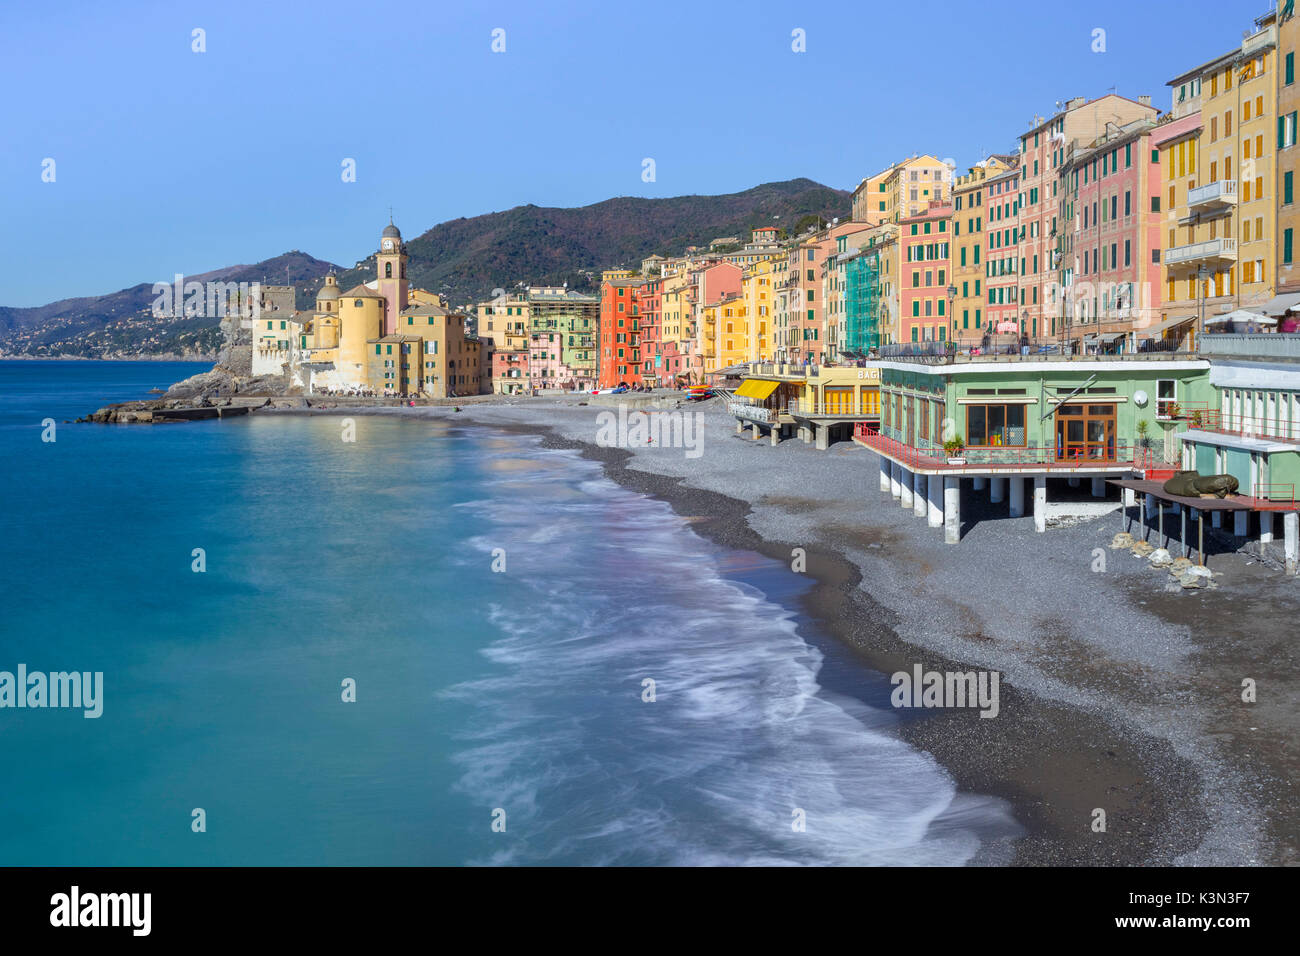 The seafront of Camogli, Genova province, Liguria, Italy. Stock Photo